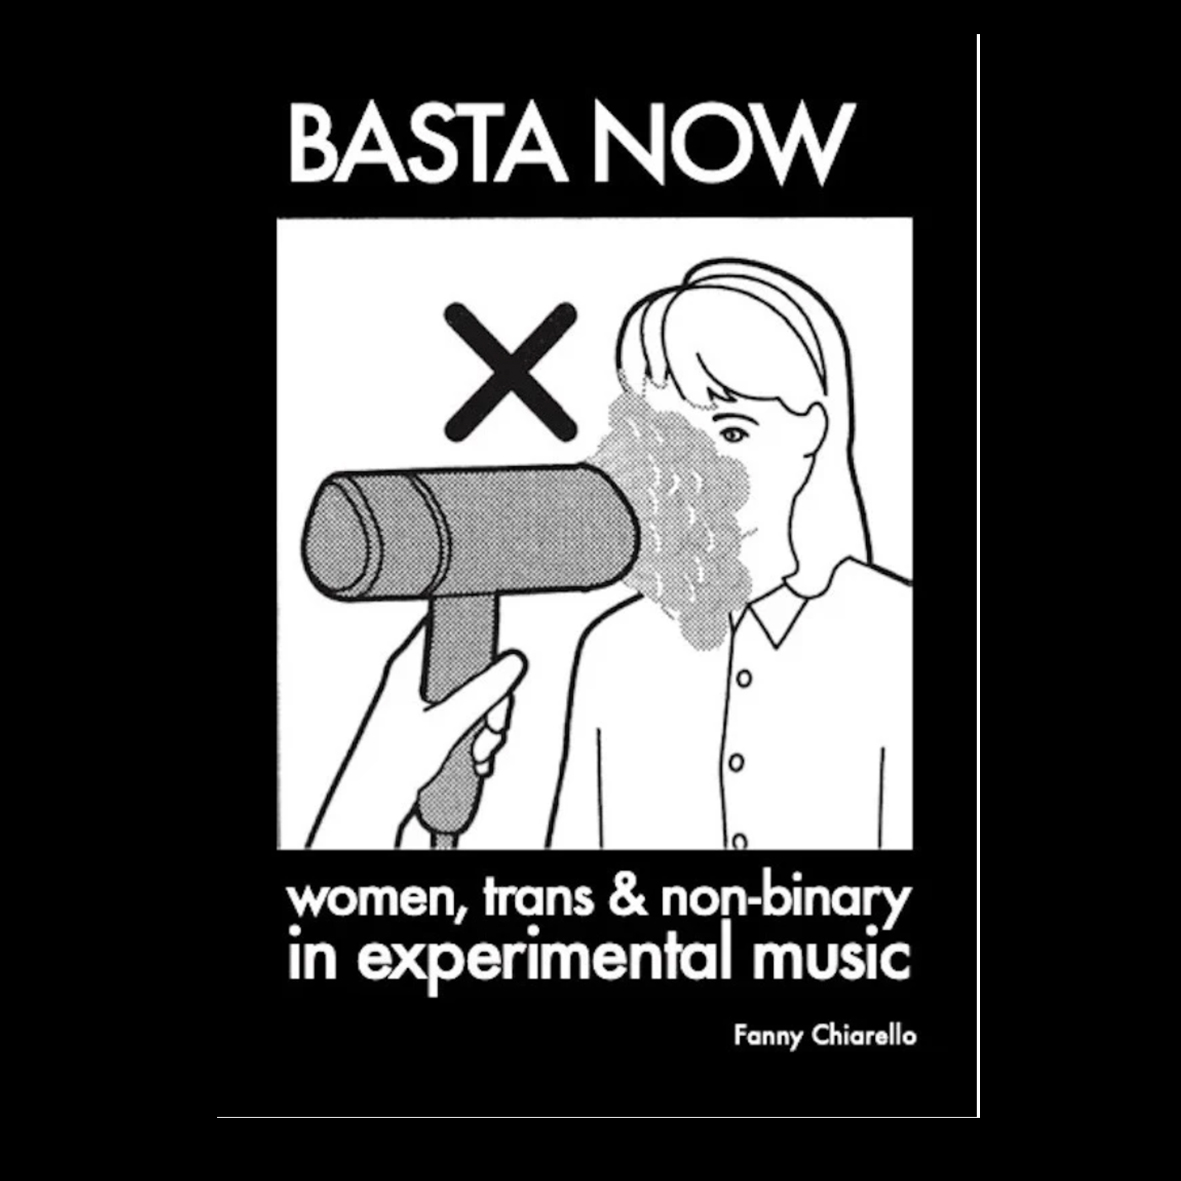 BASTA NOW: Women, Trans & Non-binary in Experimental Music